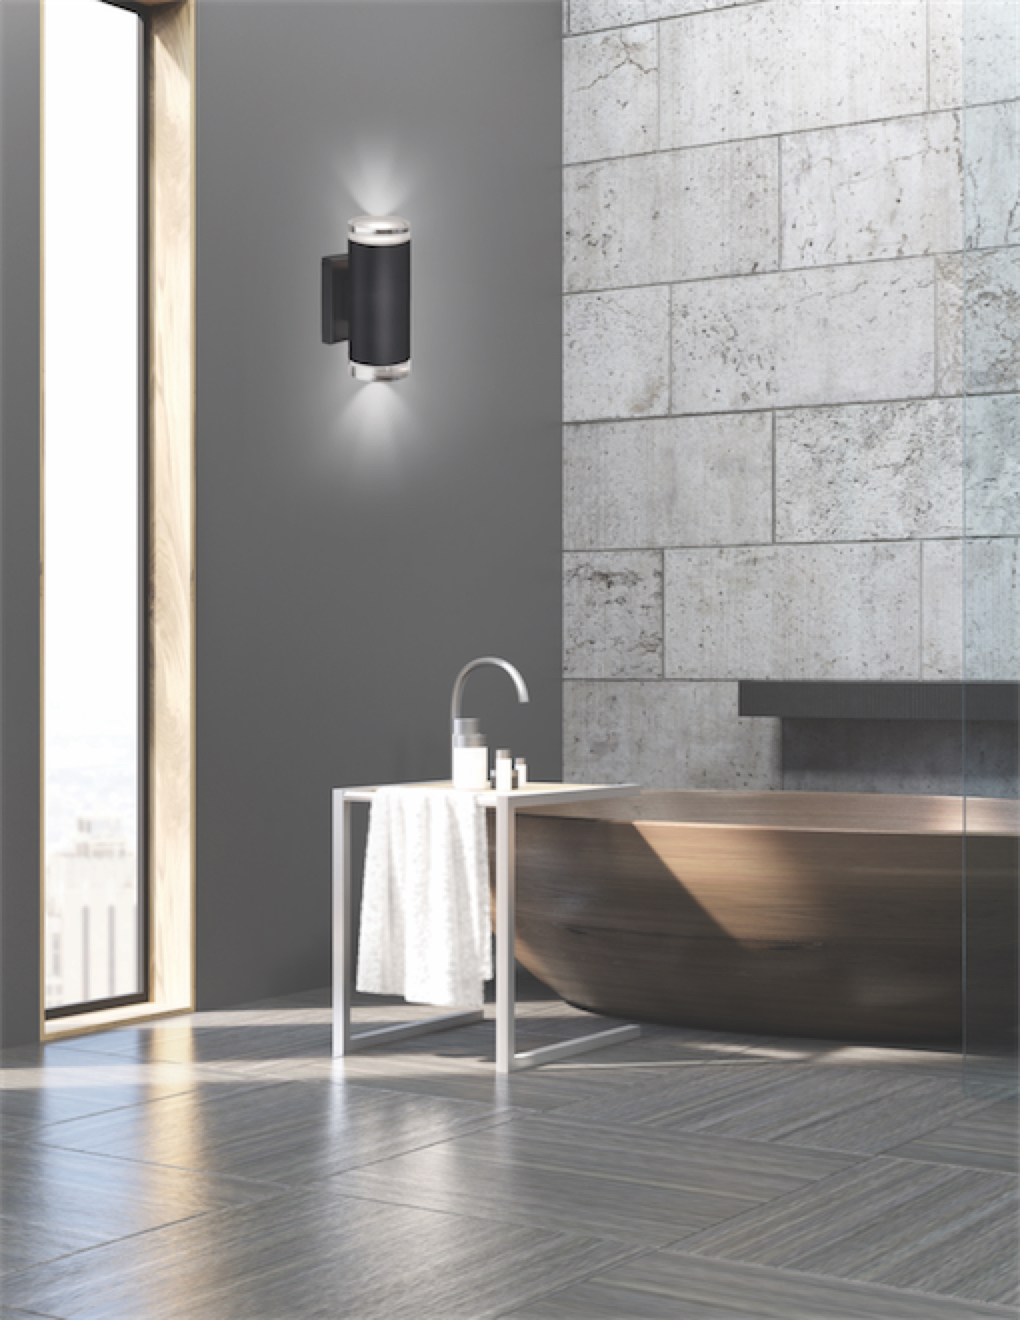 Luminaire encastré moderne NORFOLK Kuzco 601432-ledb dans une salle de bain moderne